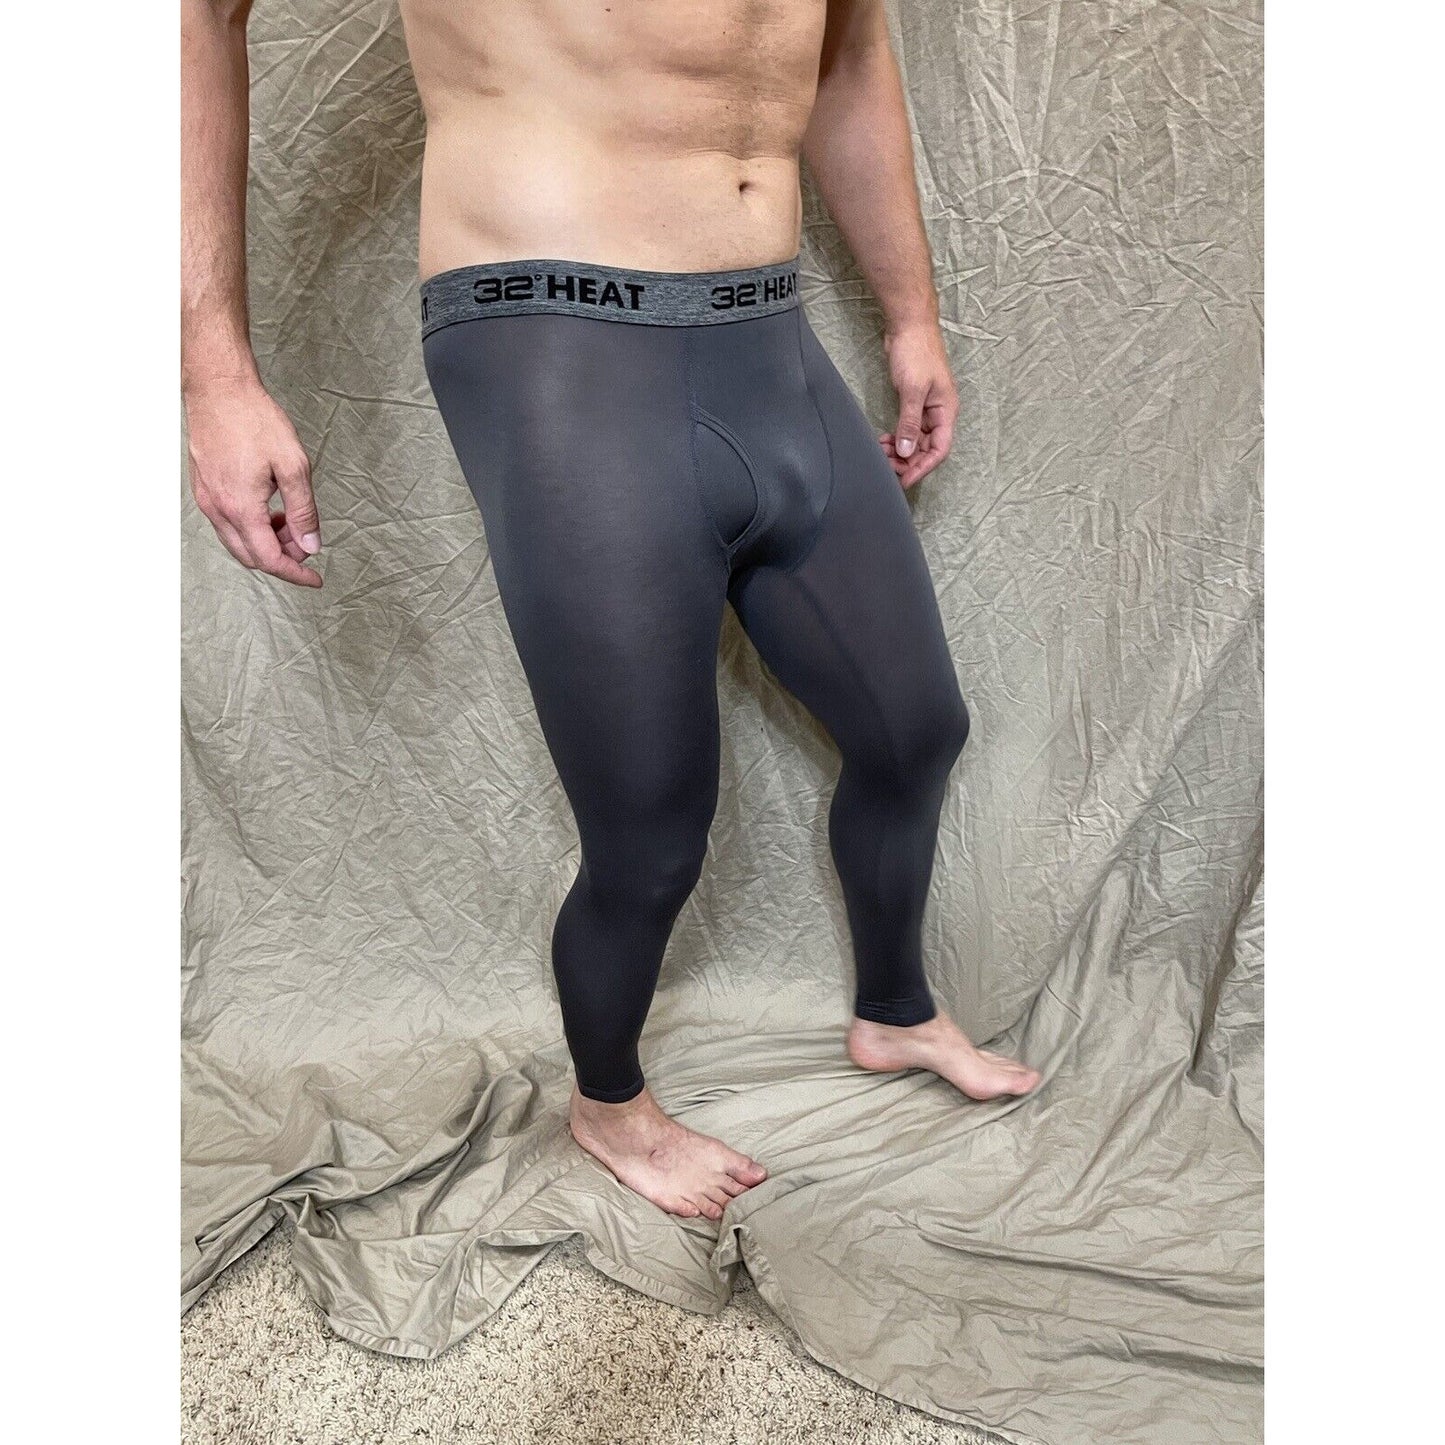 32 degree heat stingray gray compression leggings base layer long underwear Med